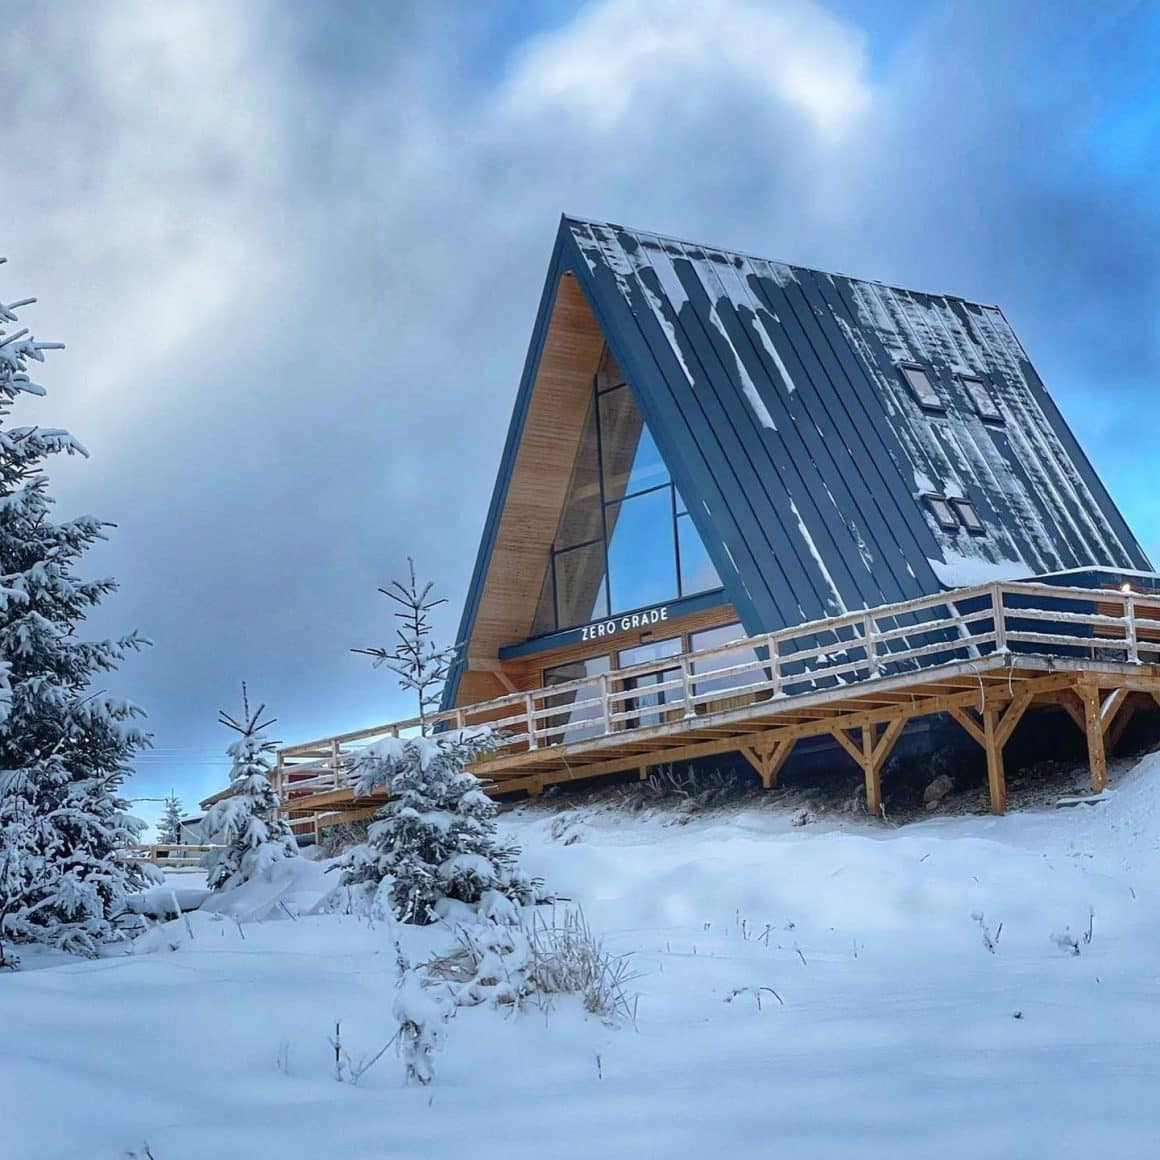 cabana a frame - restaurant zero grade fotografiat iarna din exterior, cu multa zapada. Restaurante Păltiniș